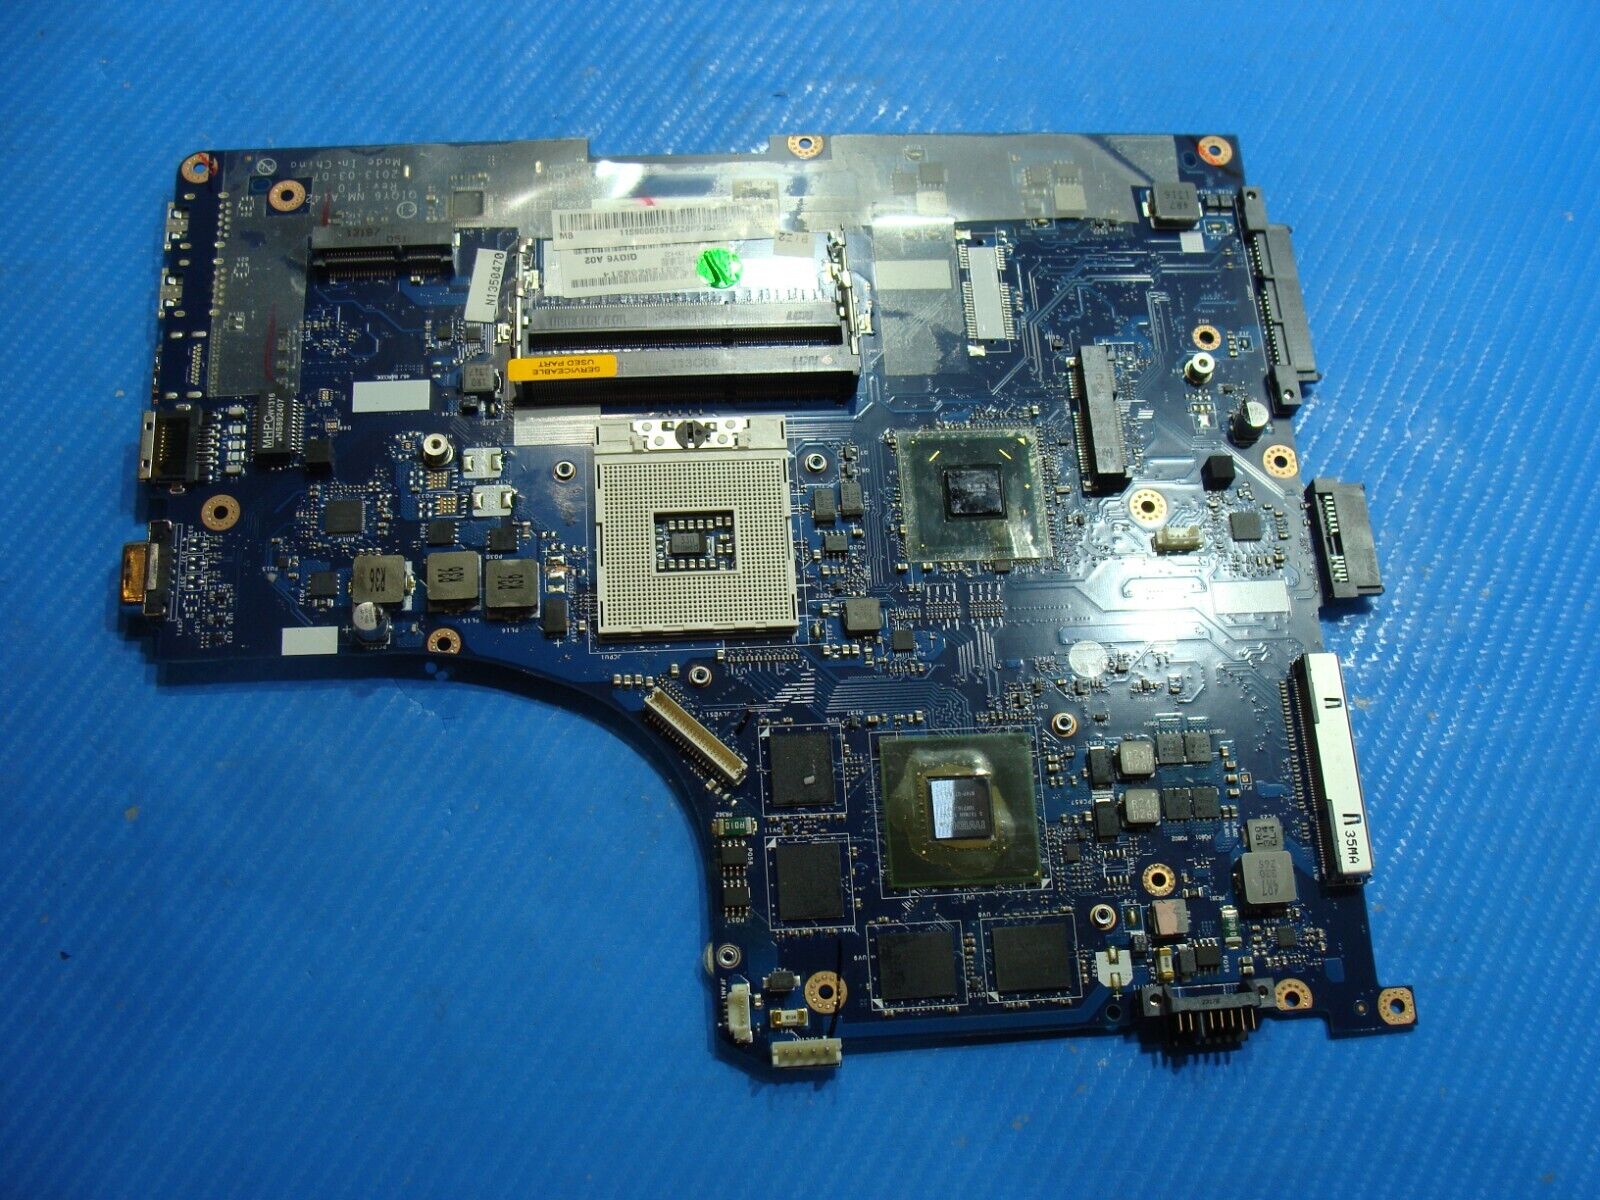 Lenovo IdeaPad 15.6” Y500 Intel Socket Nvidia Geforce GT750M Motherboard NM-A142